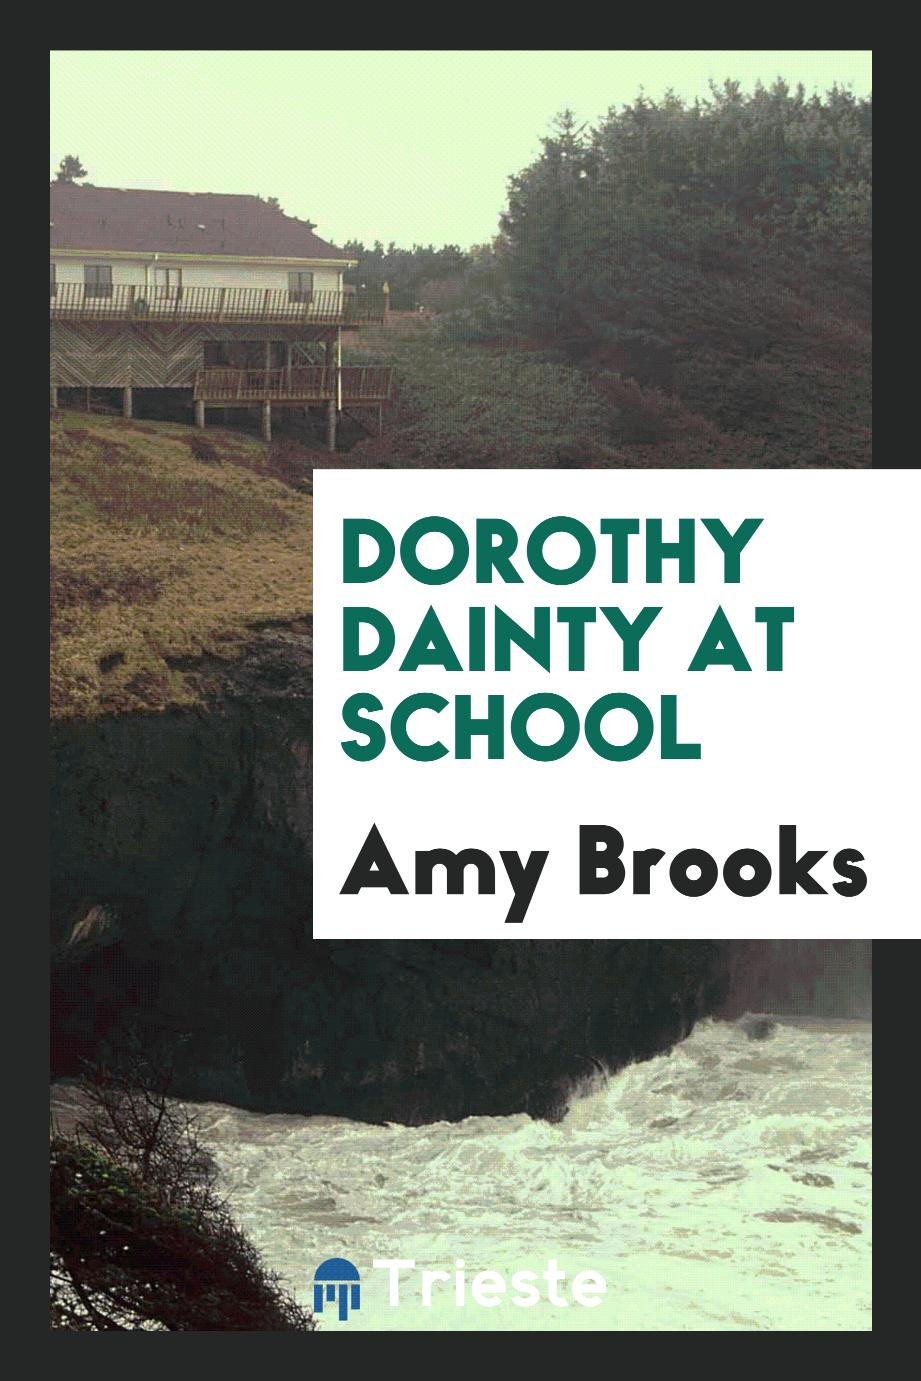 Dorothy Dainty at school